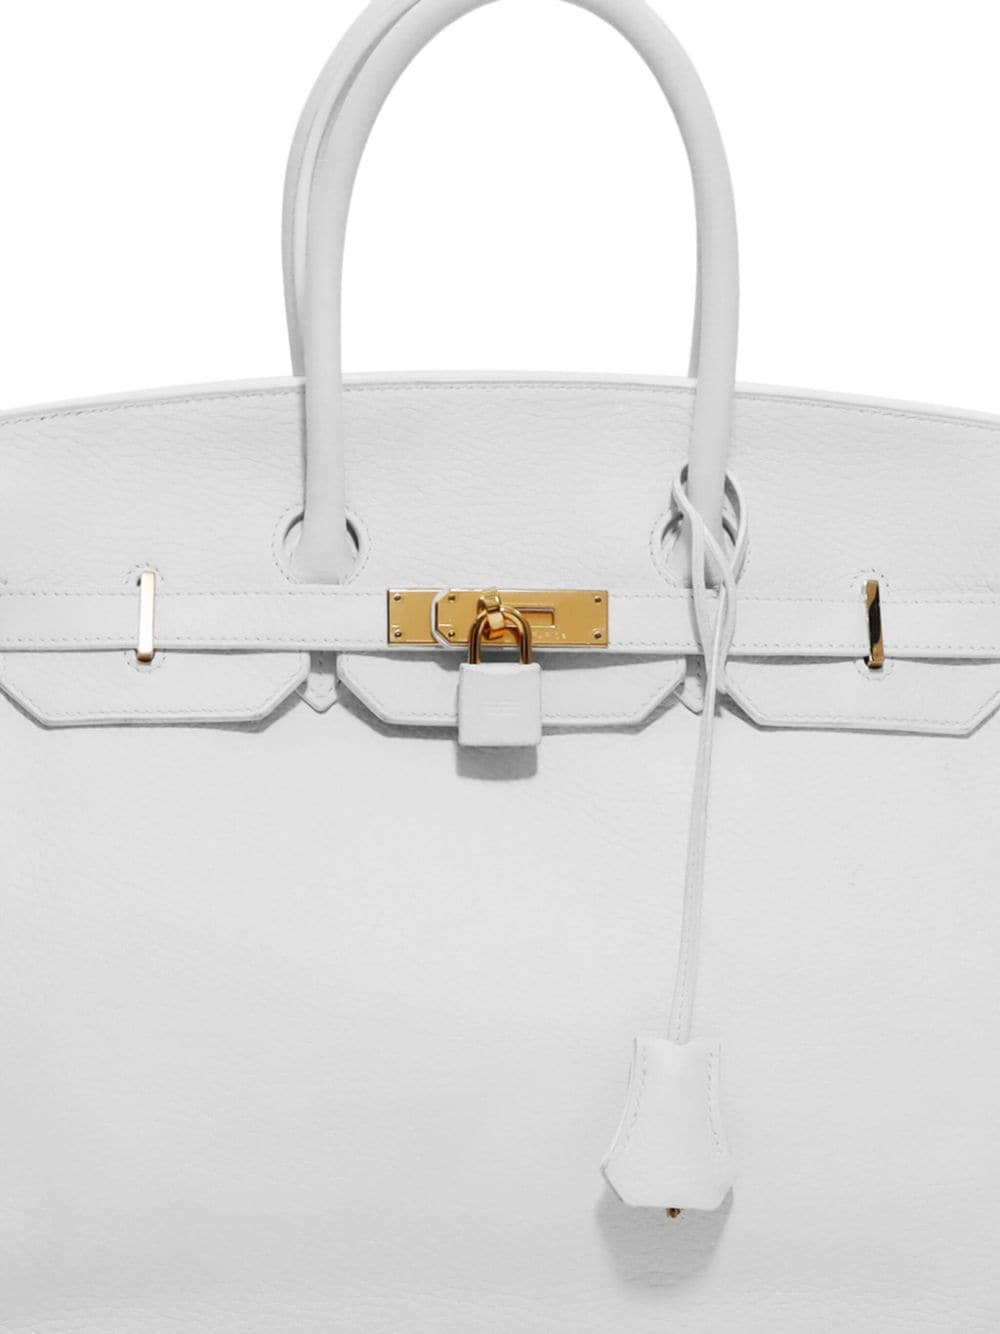 Hermès 2015 Birkin 35 Handbag